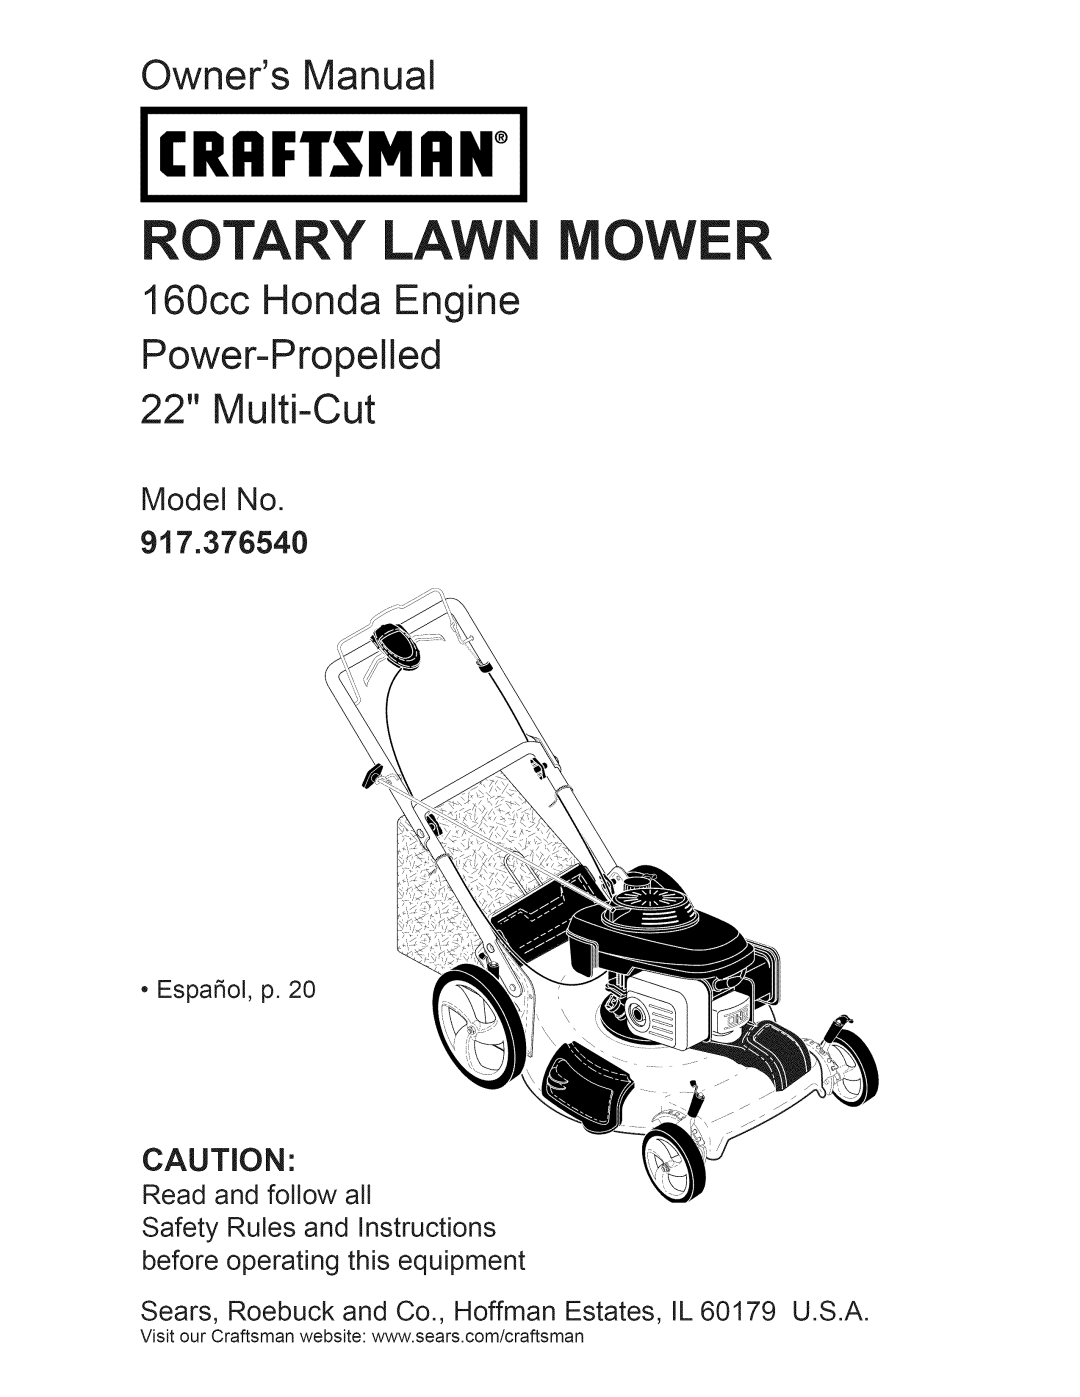 Craftsman manual Model No 917.376540, Craftsman, Rotary Lawn Mower, Owners Manual 